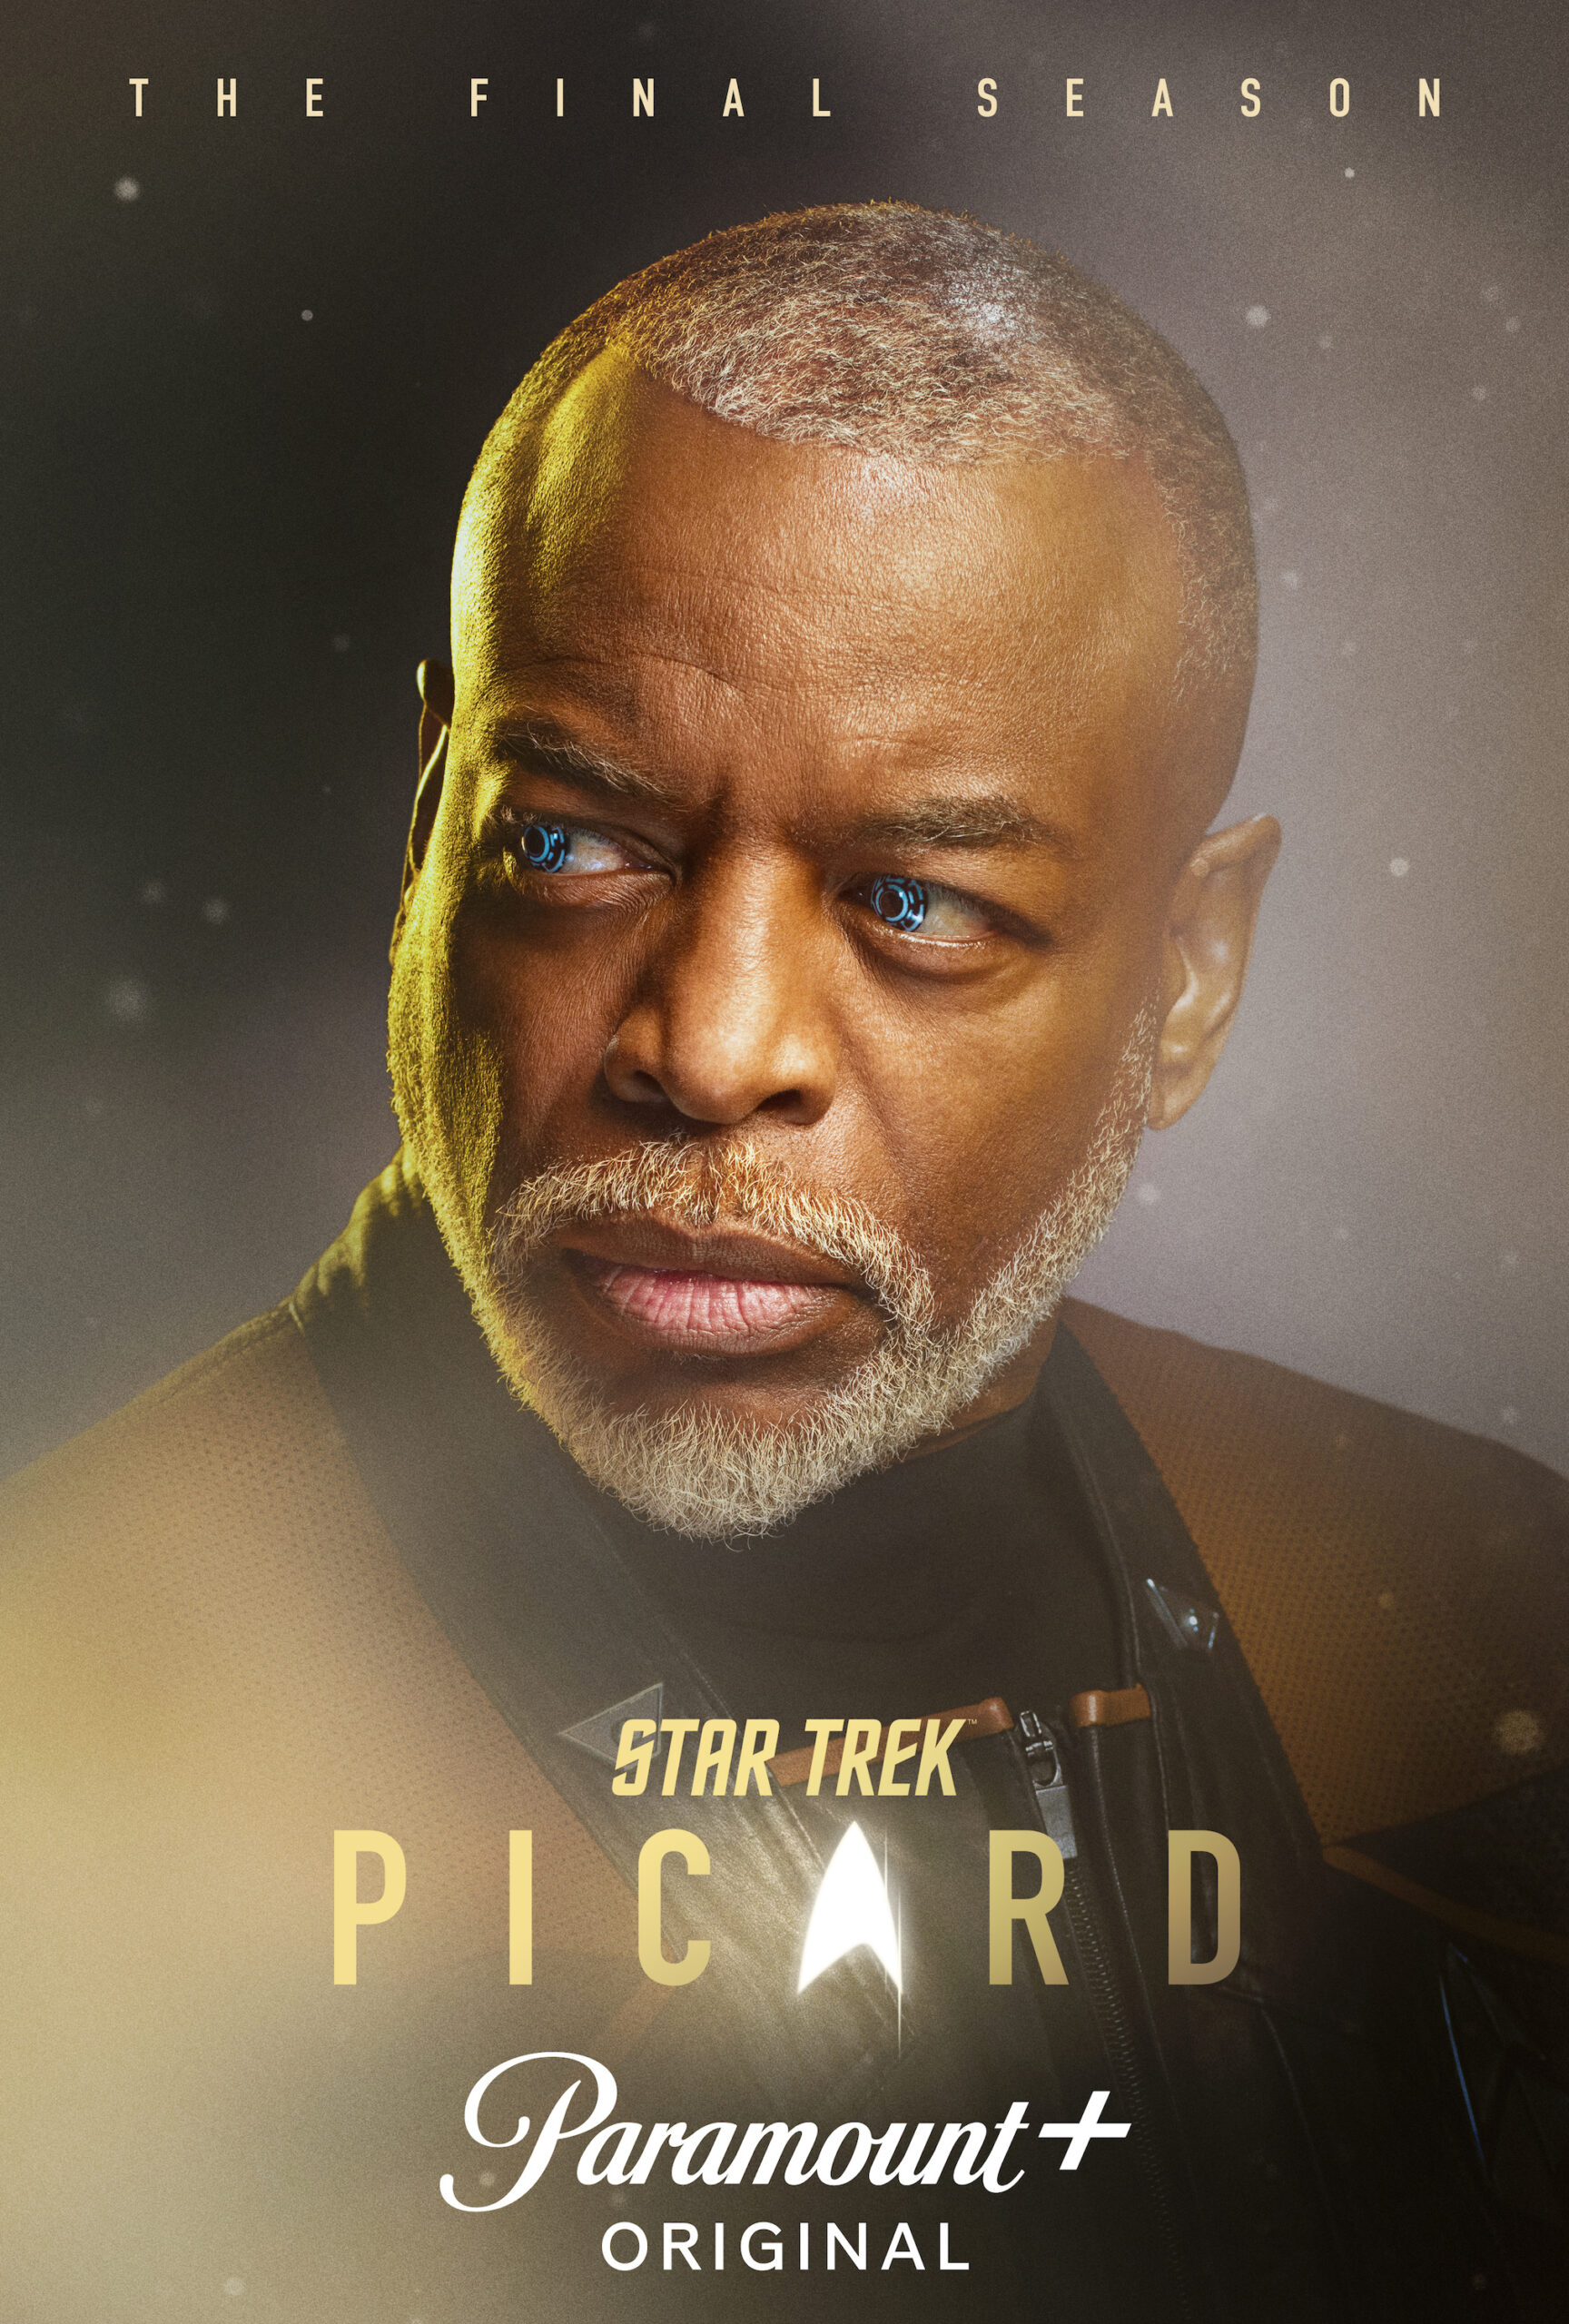 LeVar Burton as Lieutenant Commander Geordi La Forge in Star Trek: Picard